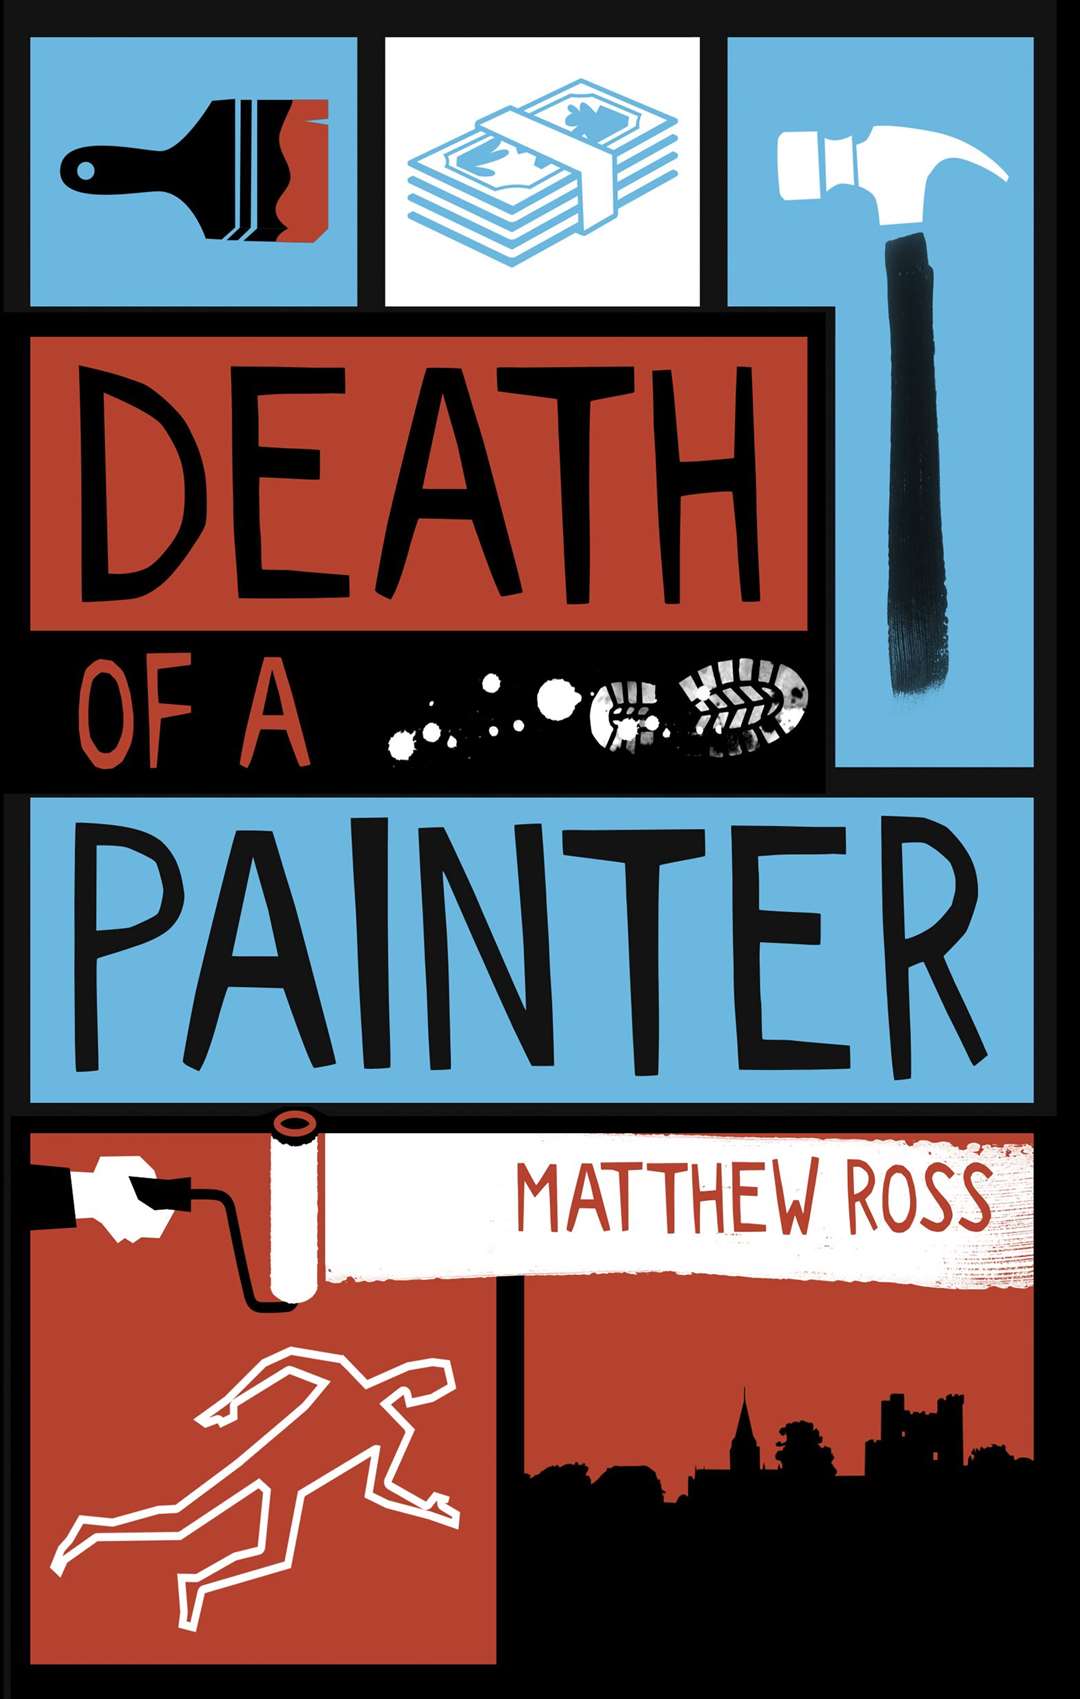 Death of a Painter was Matthew Ross's debut novel in 2020